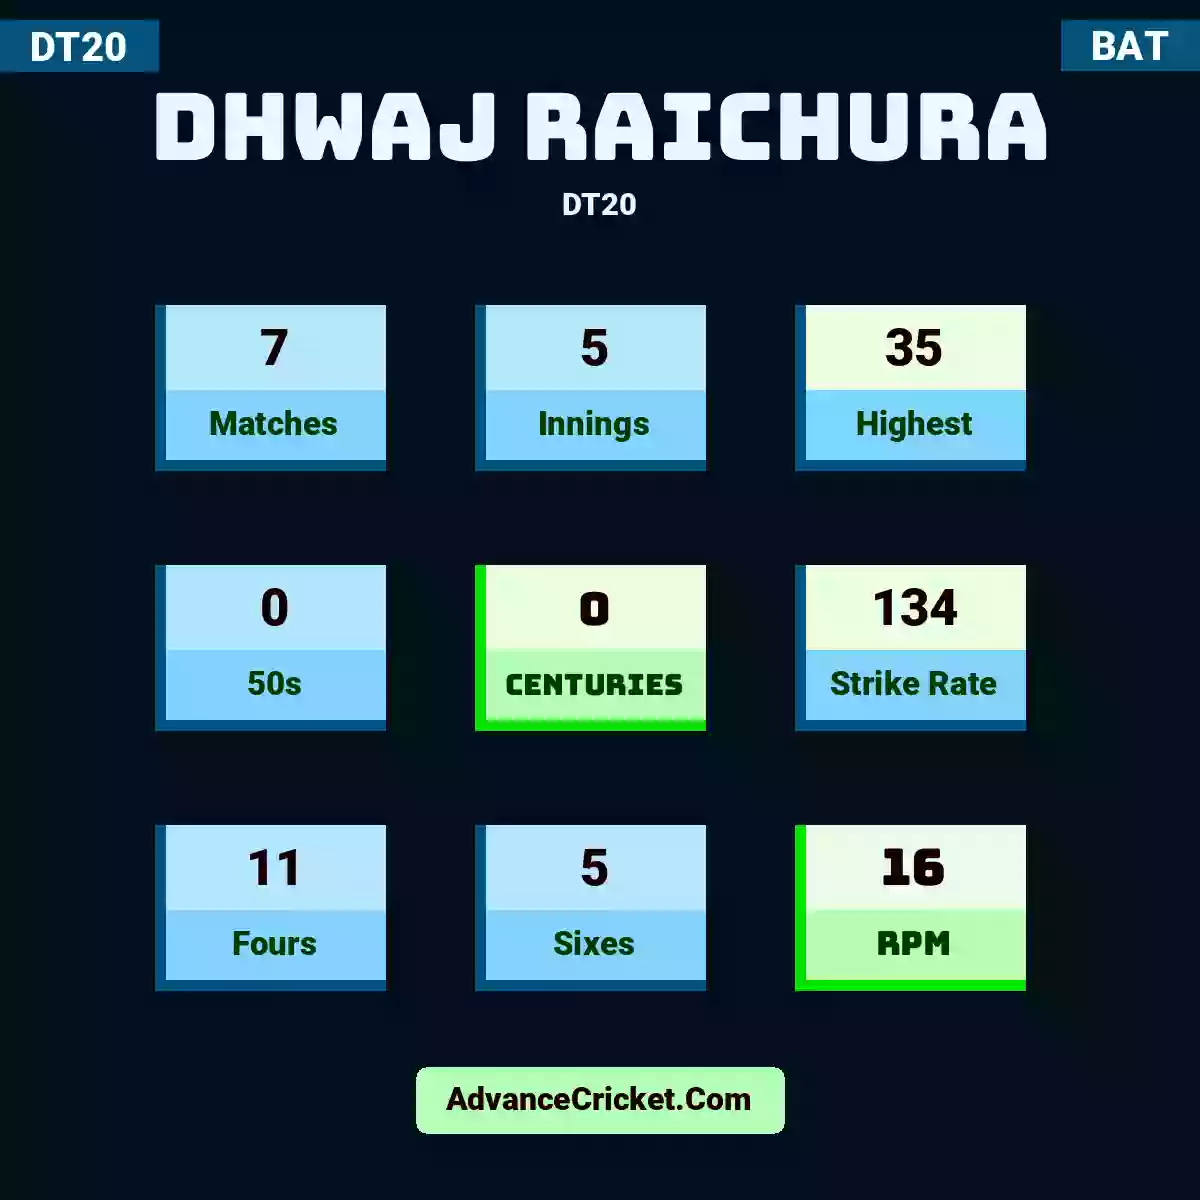 Dhwaj Raichura DT20 , Dhwaj Raichura played 7 matches, scored 35 runs as highest, 0 half-centuries, and 0 centuries, with a strike rate of 134. D.Raichura hit 11 fours and 5 sixes, with an RPM of 16.